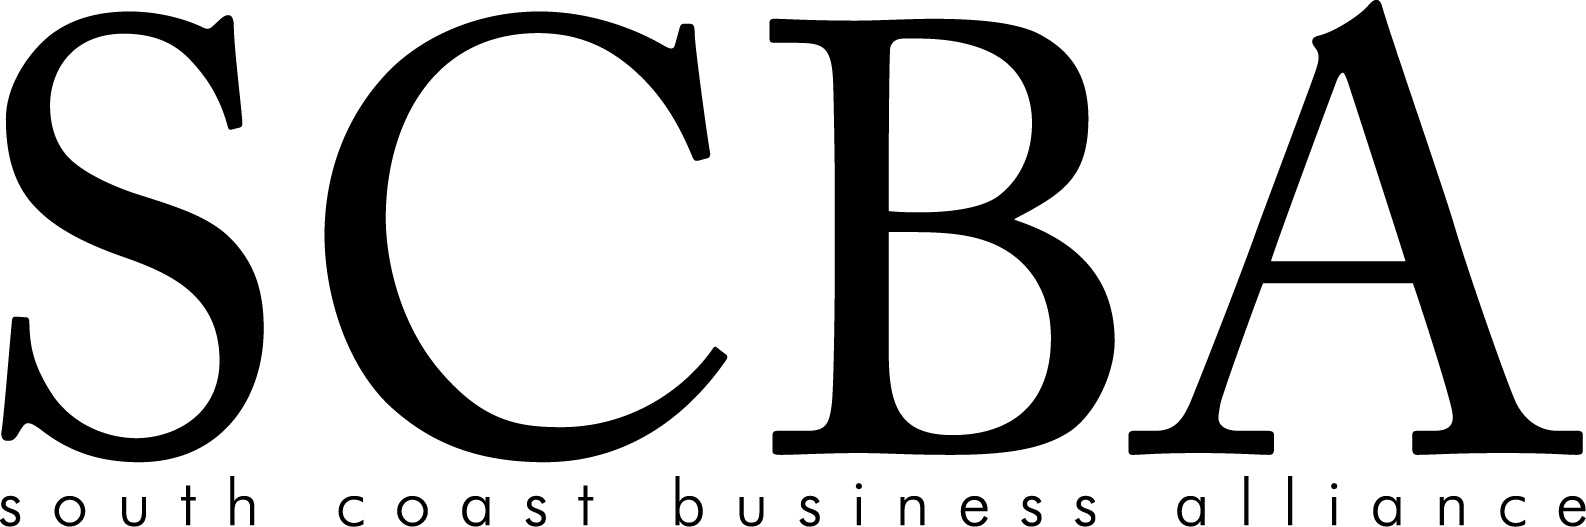 SCBA Logo - About the SCBA - South Coast Business Alliance (SCBA)